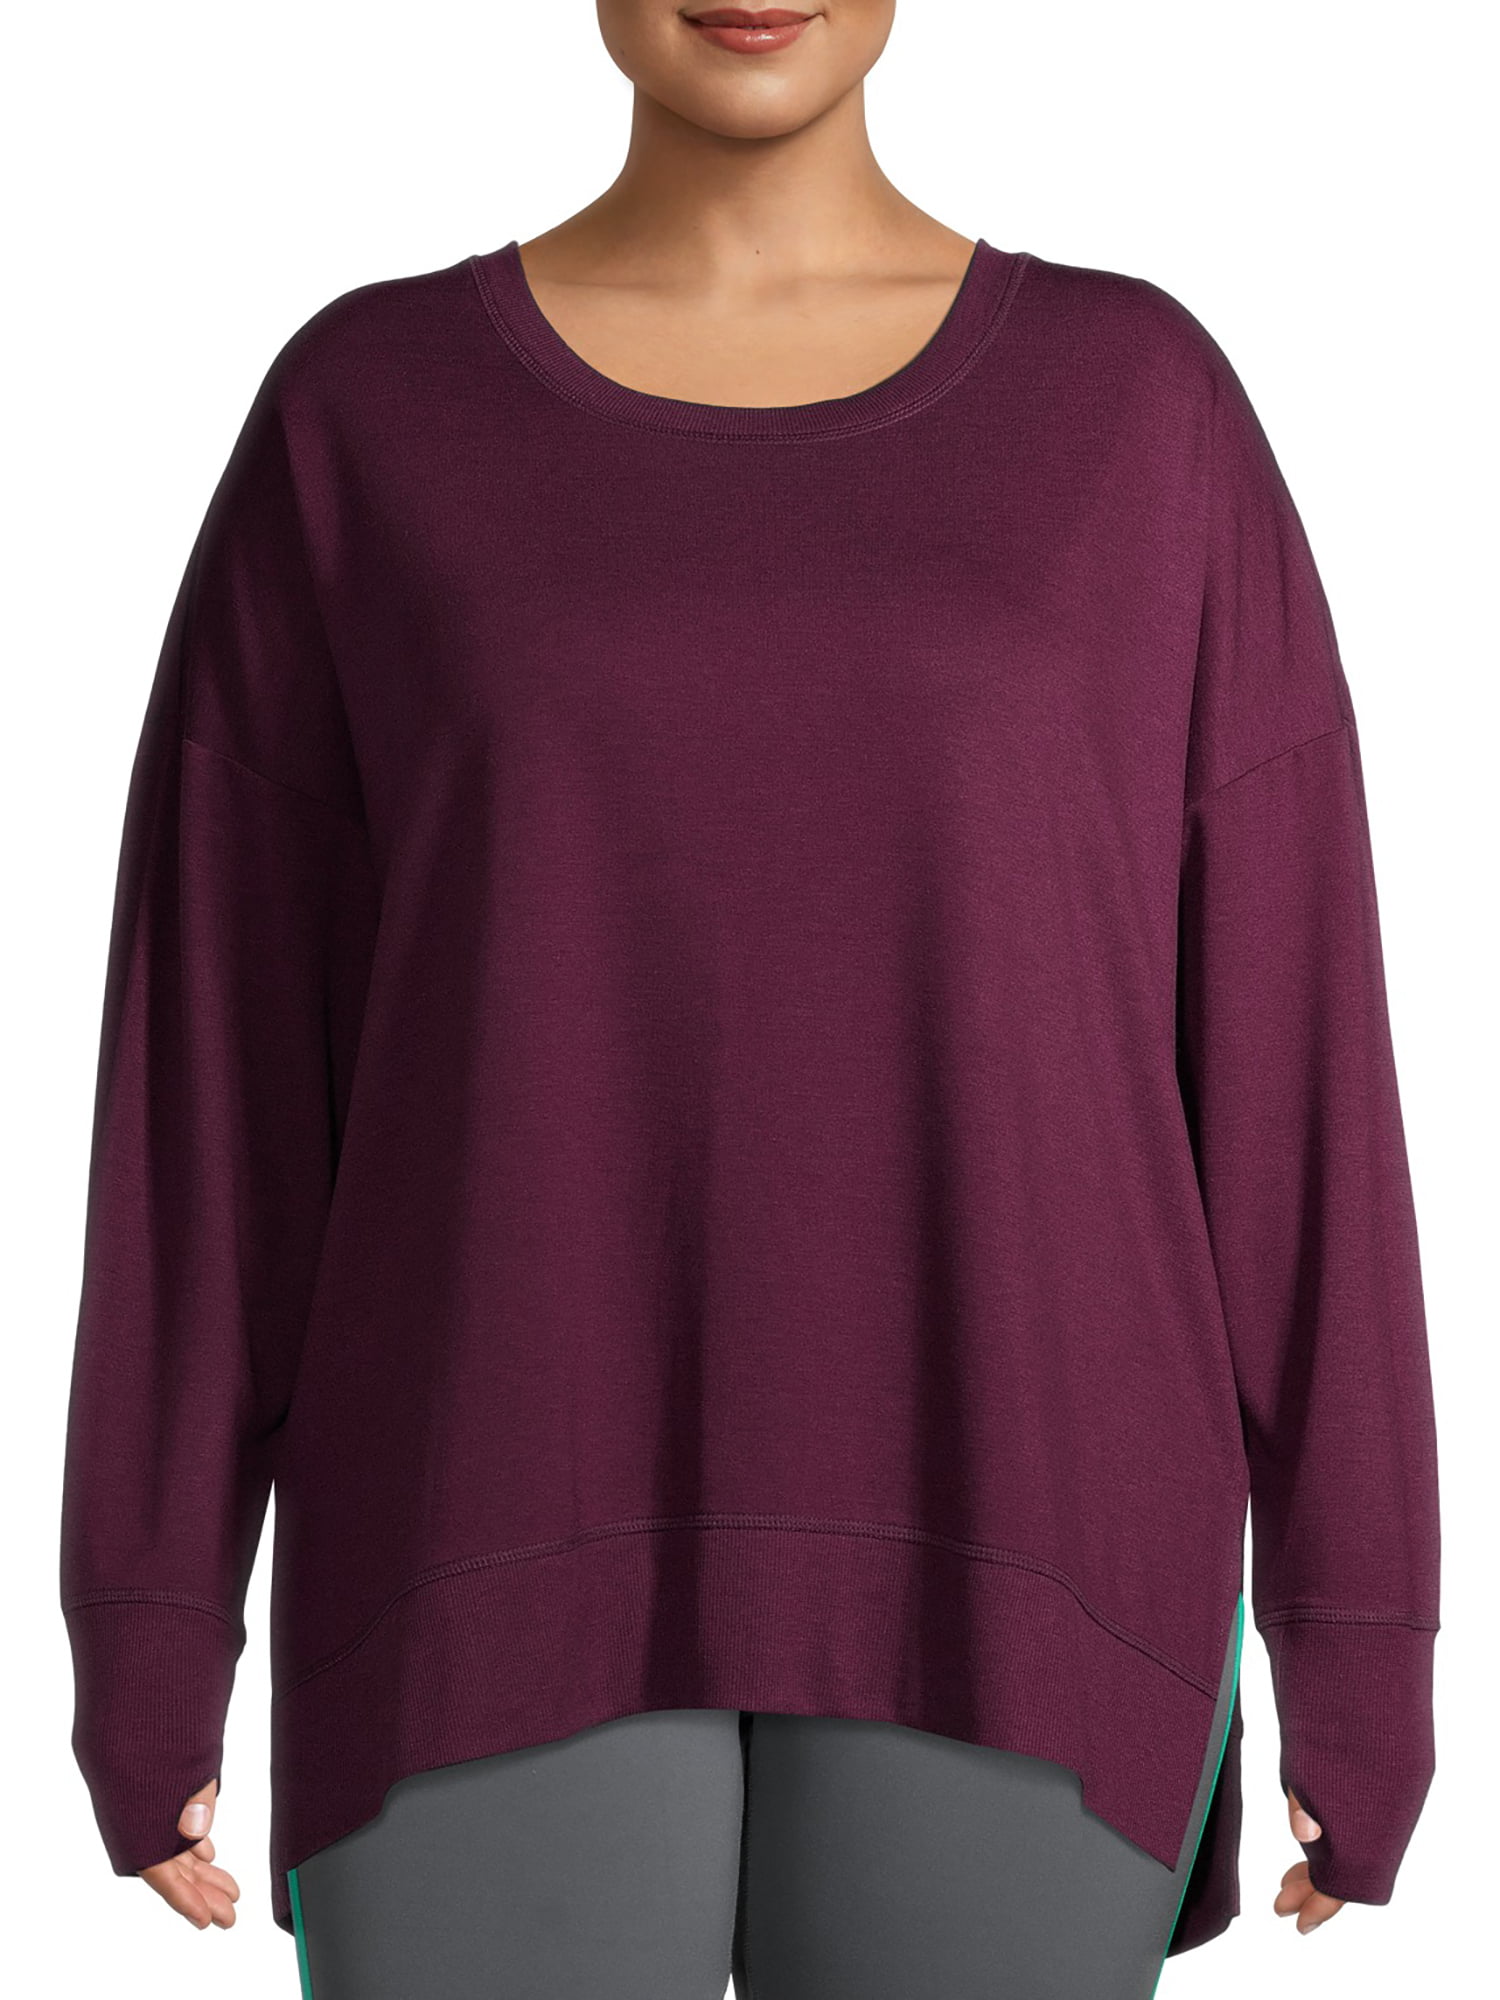 Avia - Avia Women's Plus Size Long Sleeve fleece Tee Shirt - Walmart ...